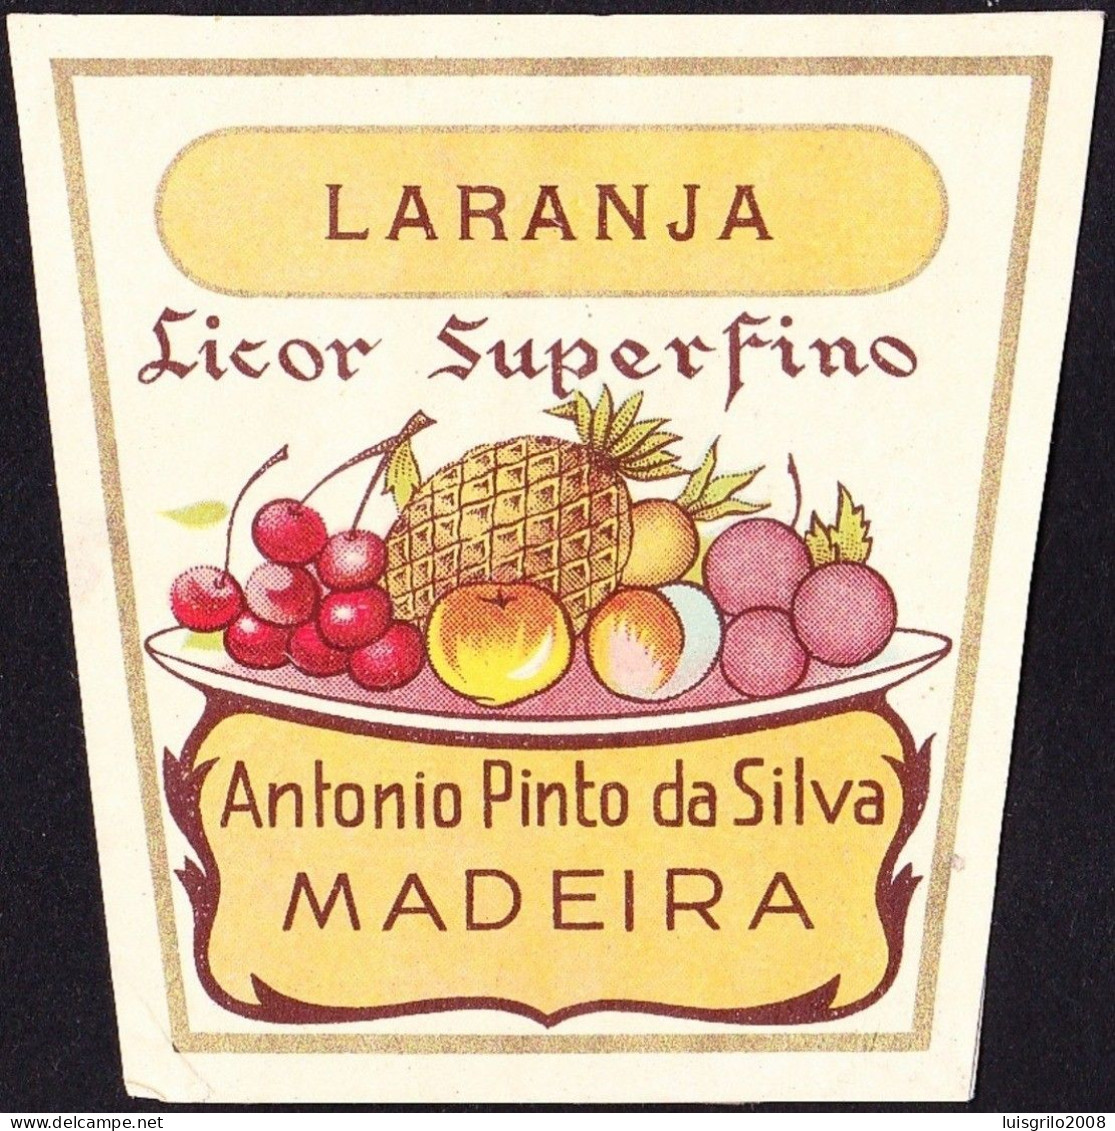 Old Liquor Label, Portugal - LARANJA. Licor Superfino. Funchal, Madeira Island - Alcoholes Y Licores